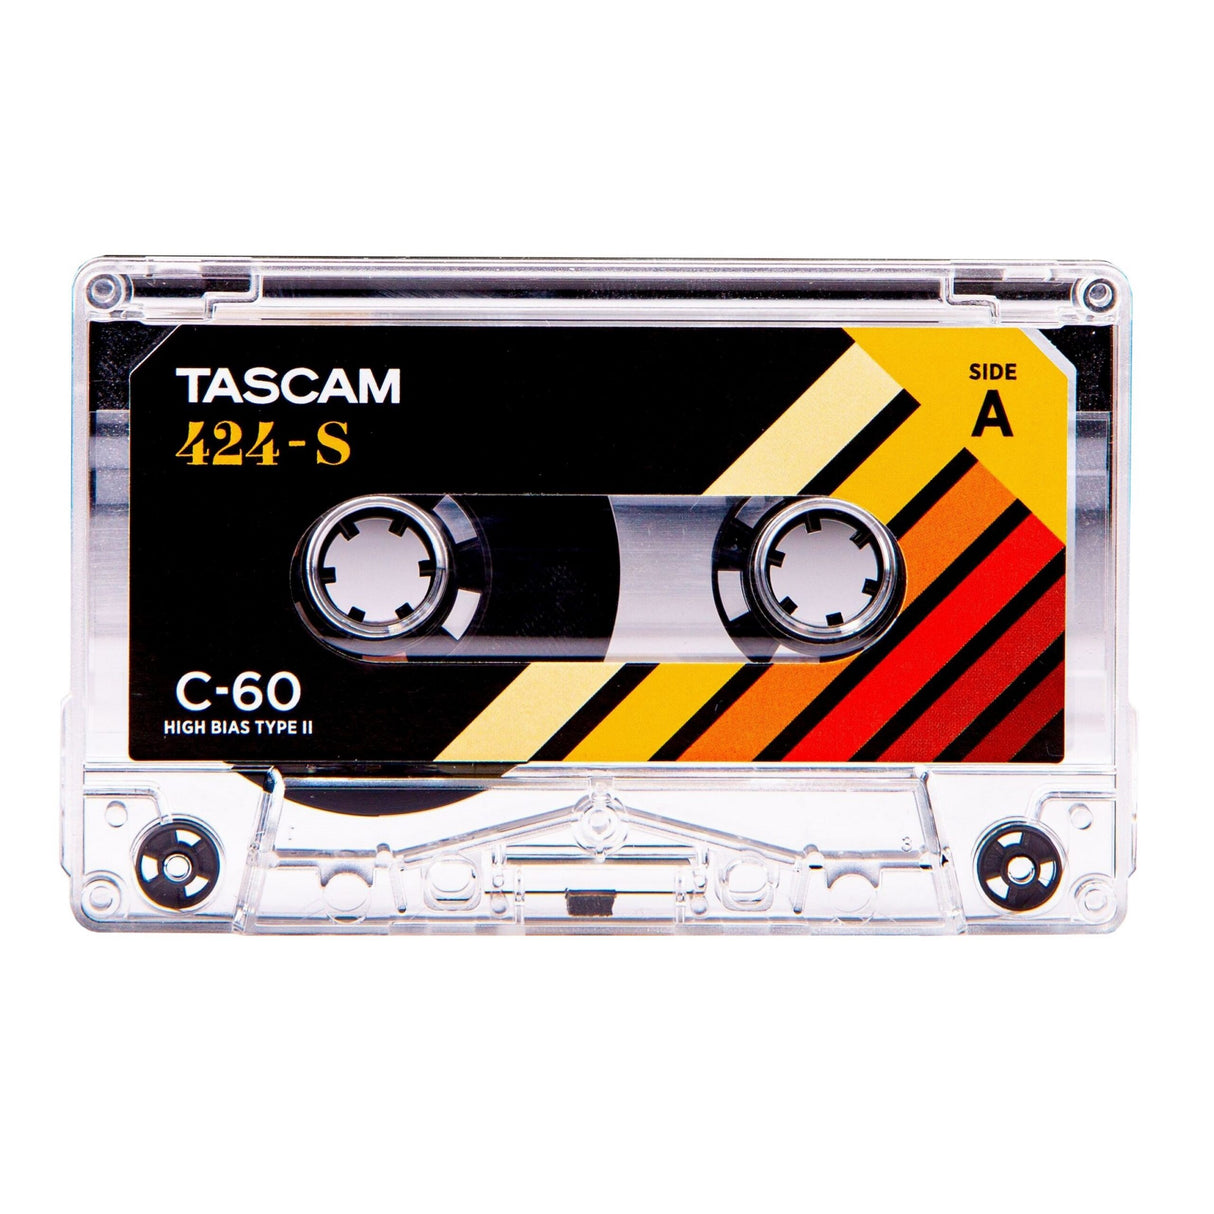 Tascam 424-S C-60 High Bias Type II Cassette